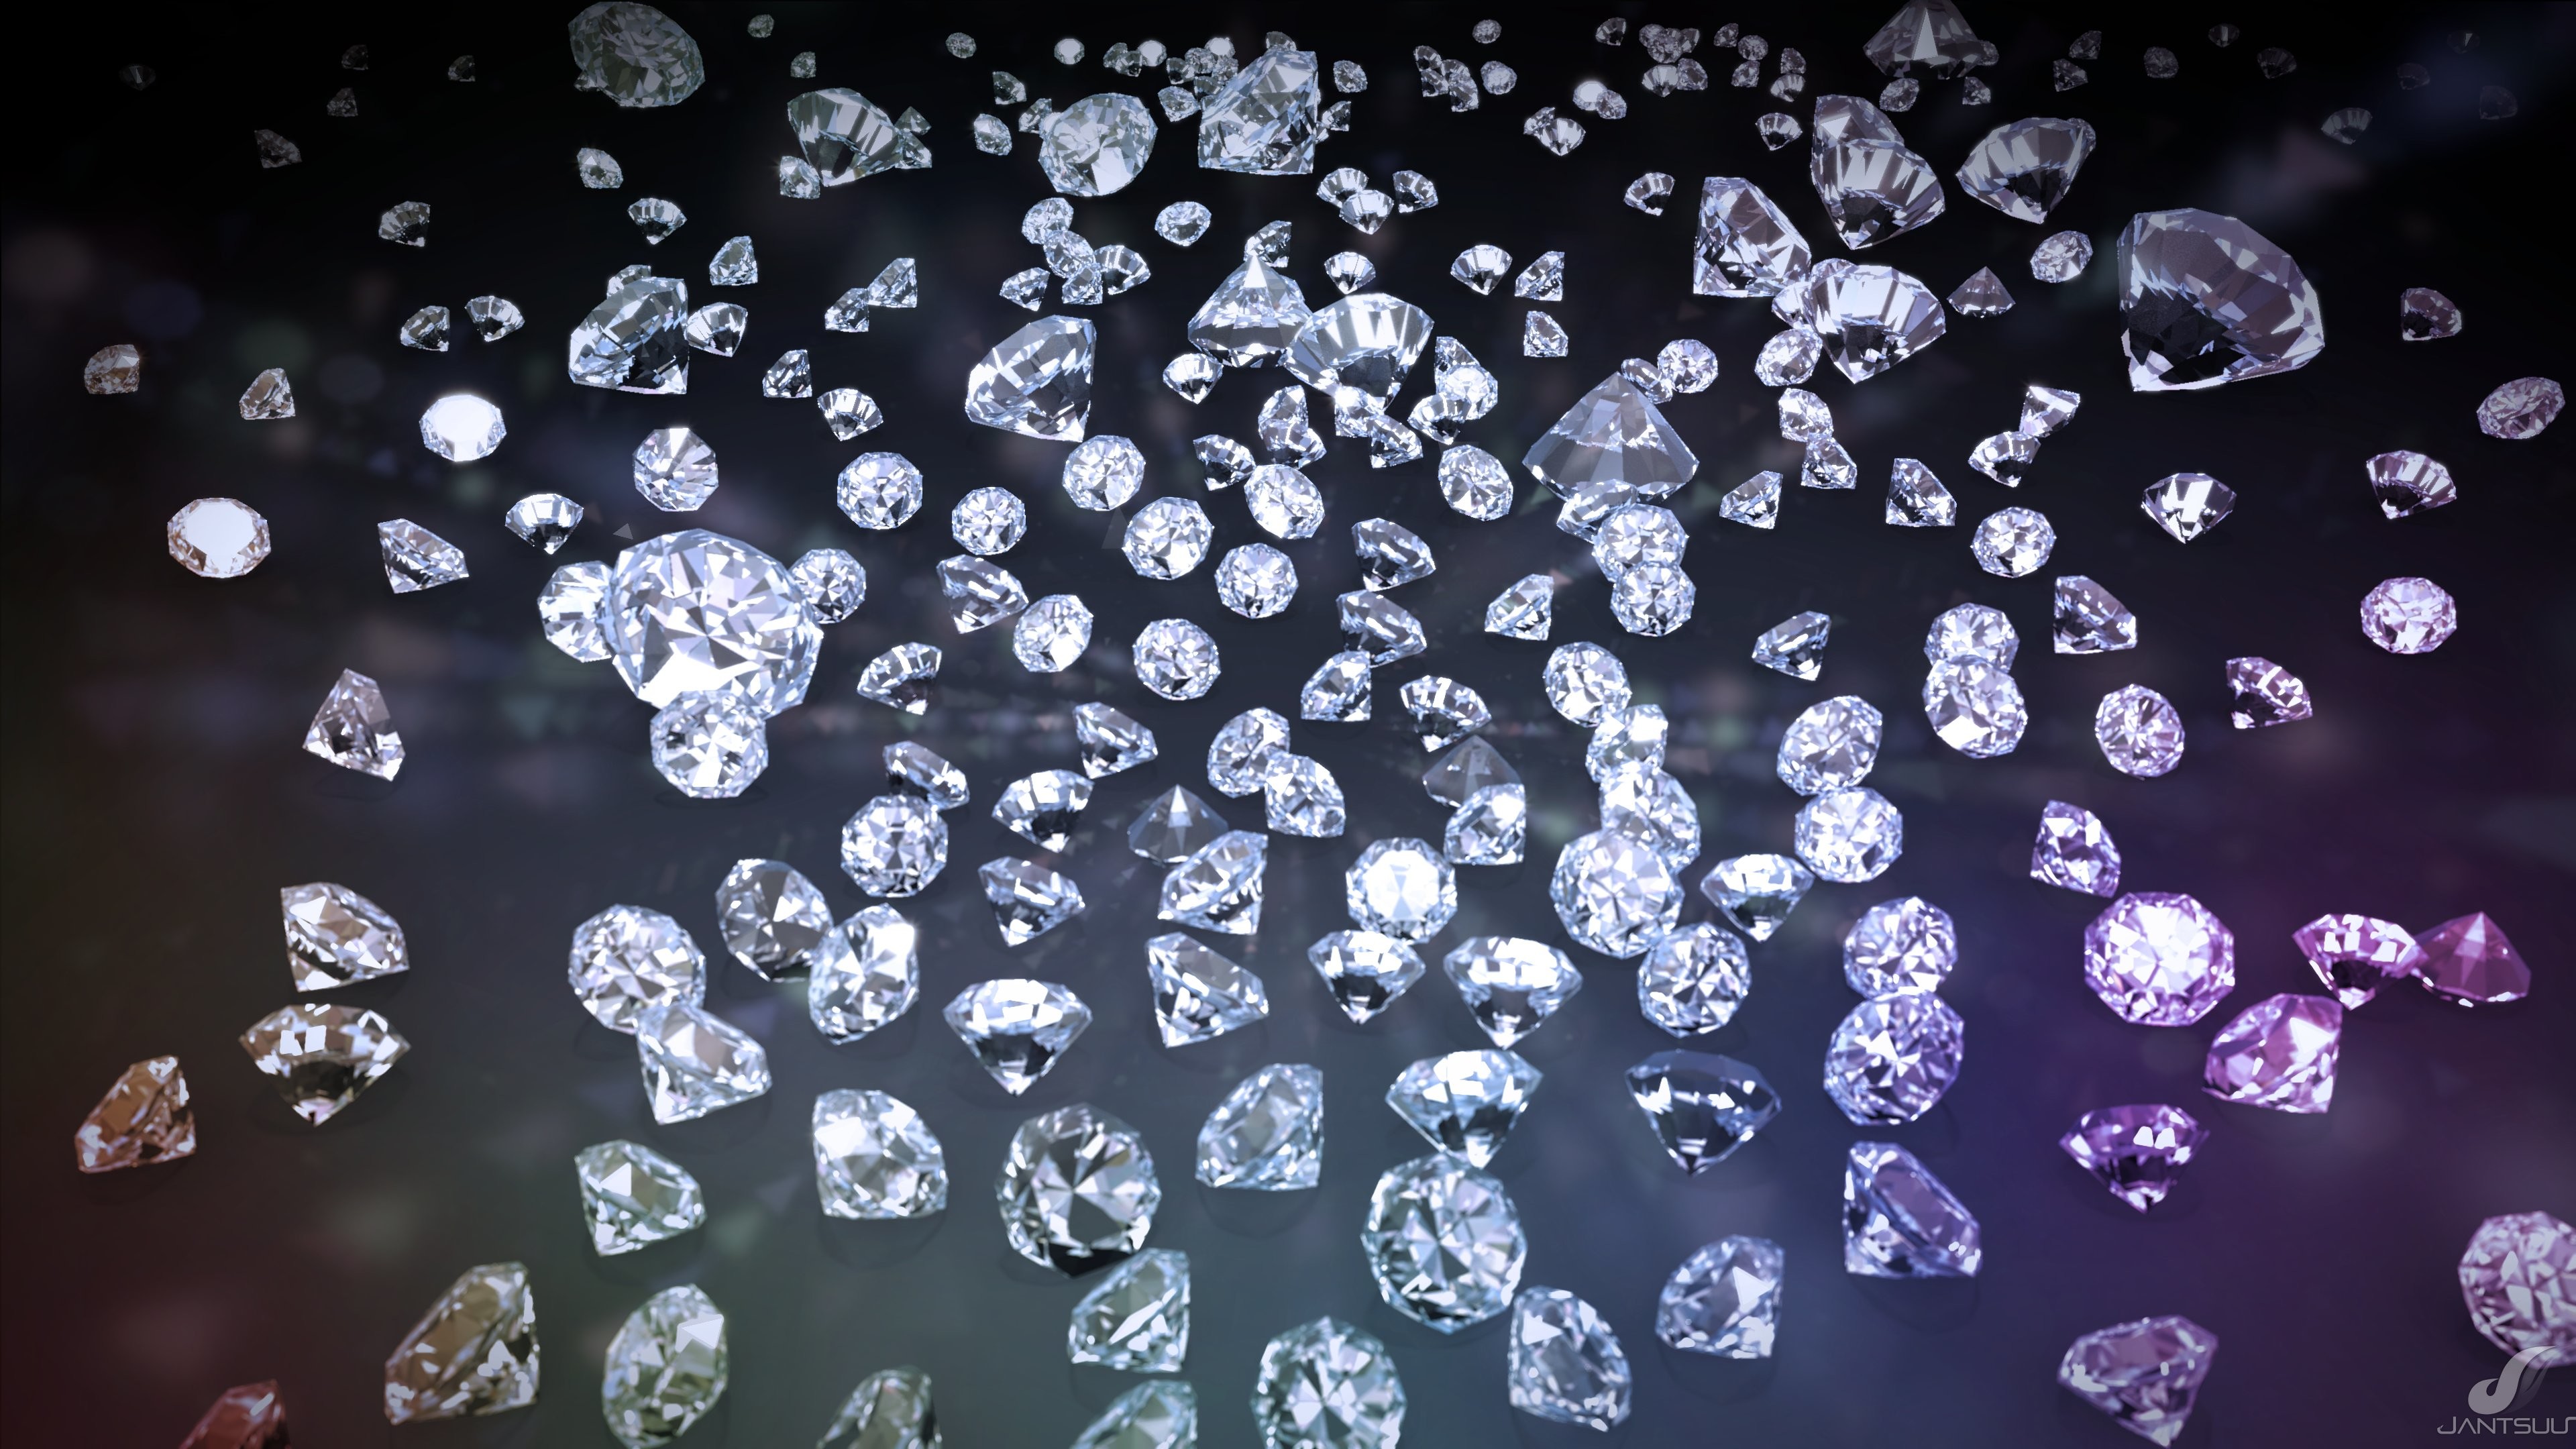 3840x2160 Diamonds diamond jewelery bokeh bling abstraction abstract sparkl...